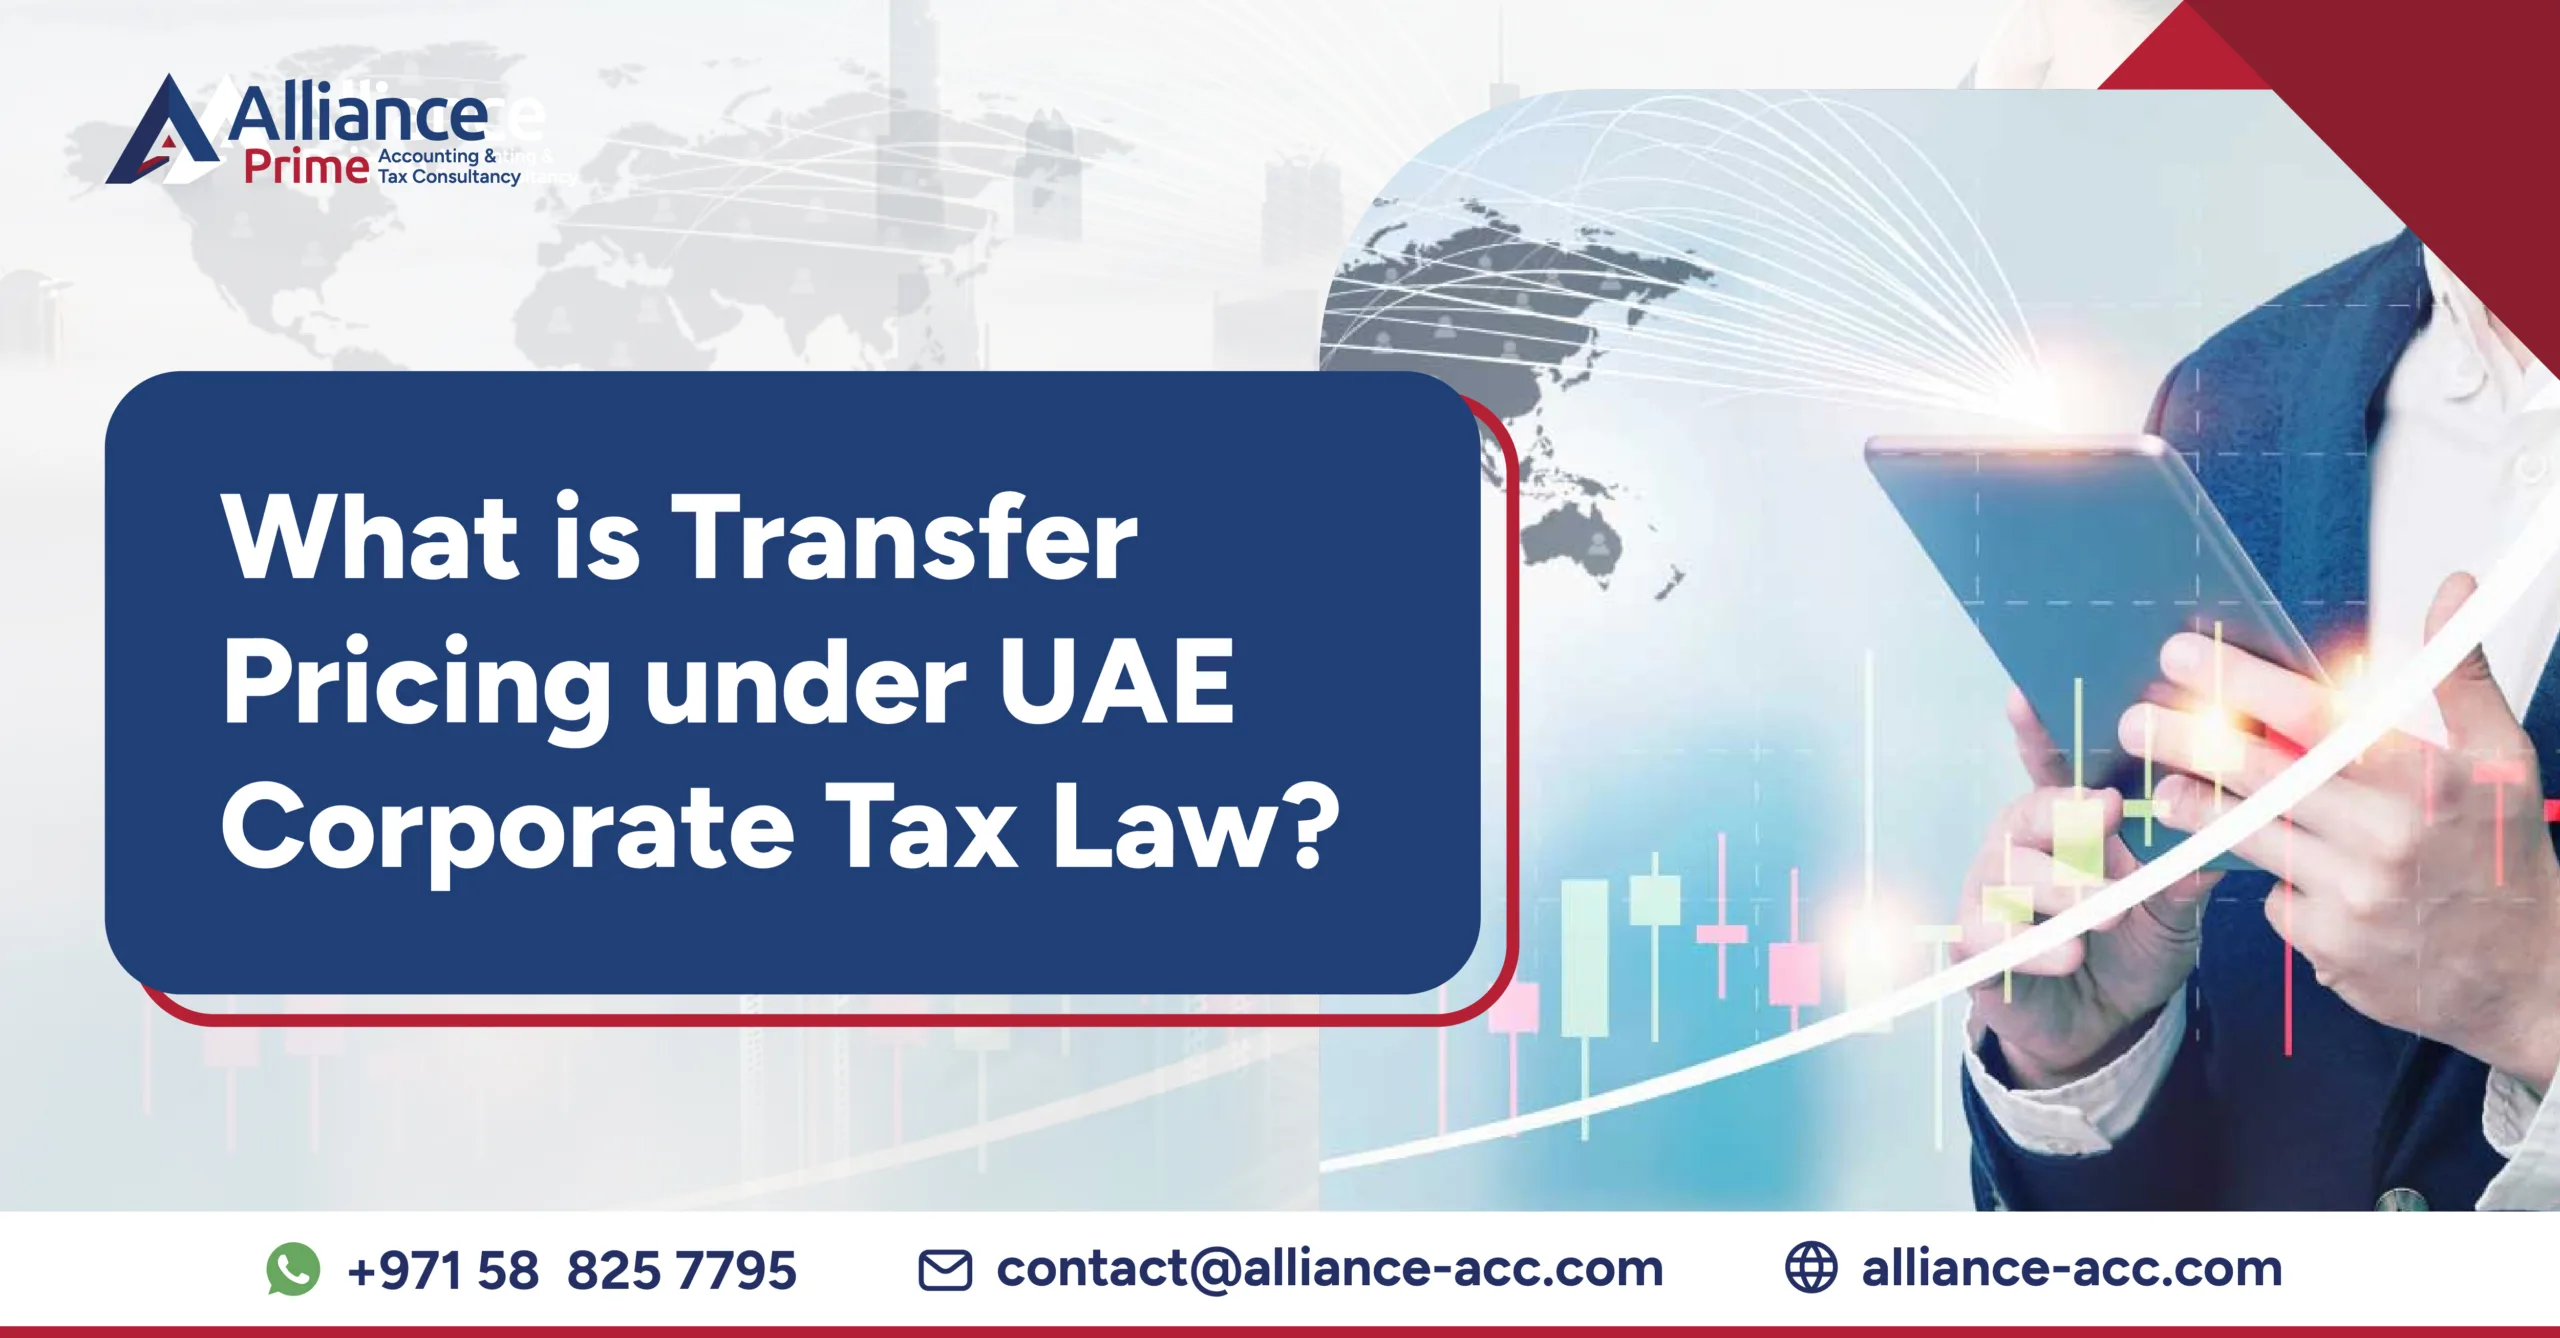 Transfer pricing in uae under new corporate tax regime